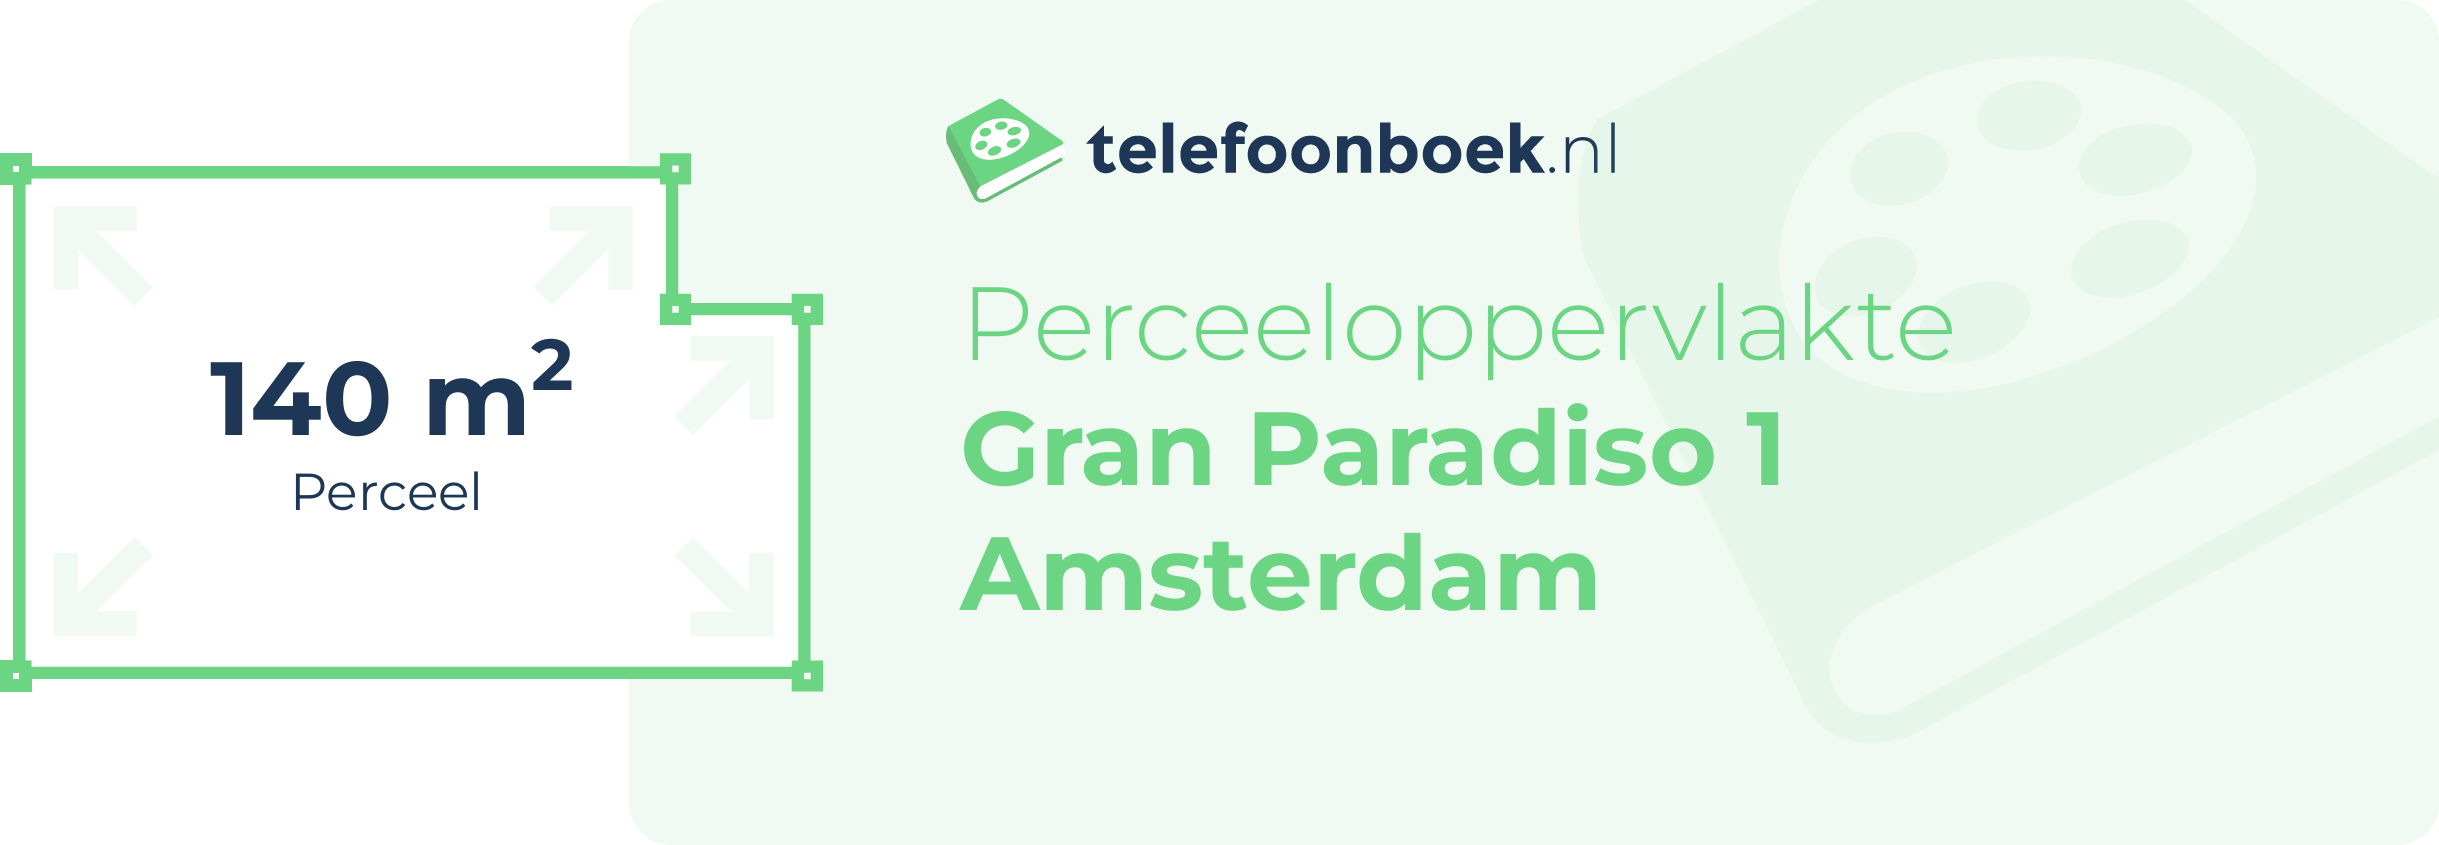 Perceeloppervlakte Gran Paradiso 1 Amsterdam